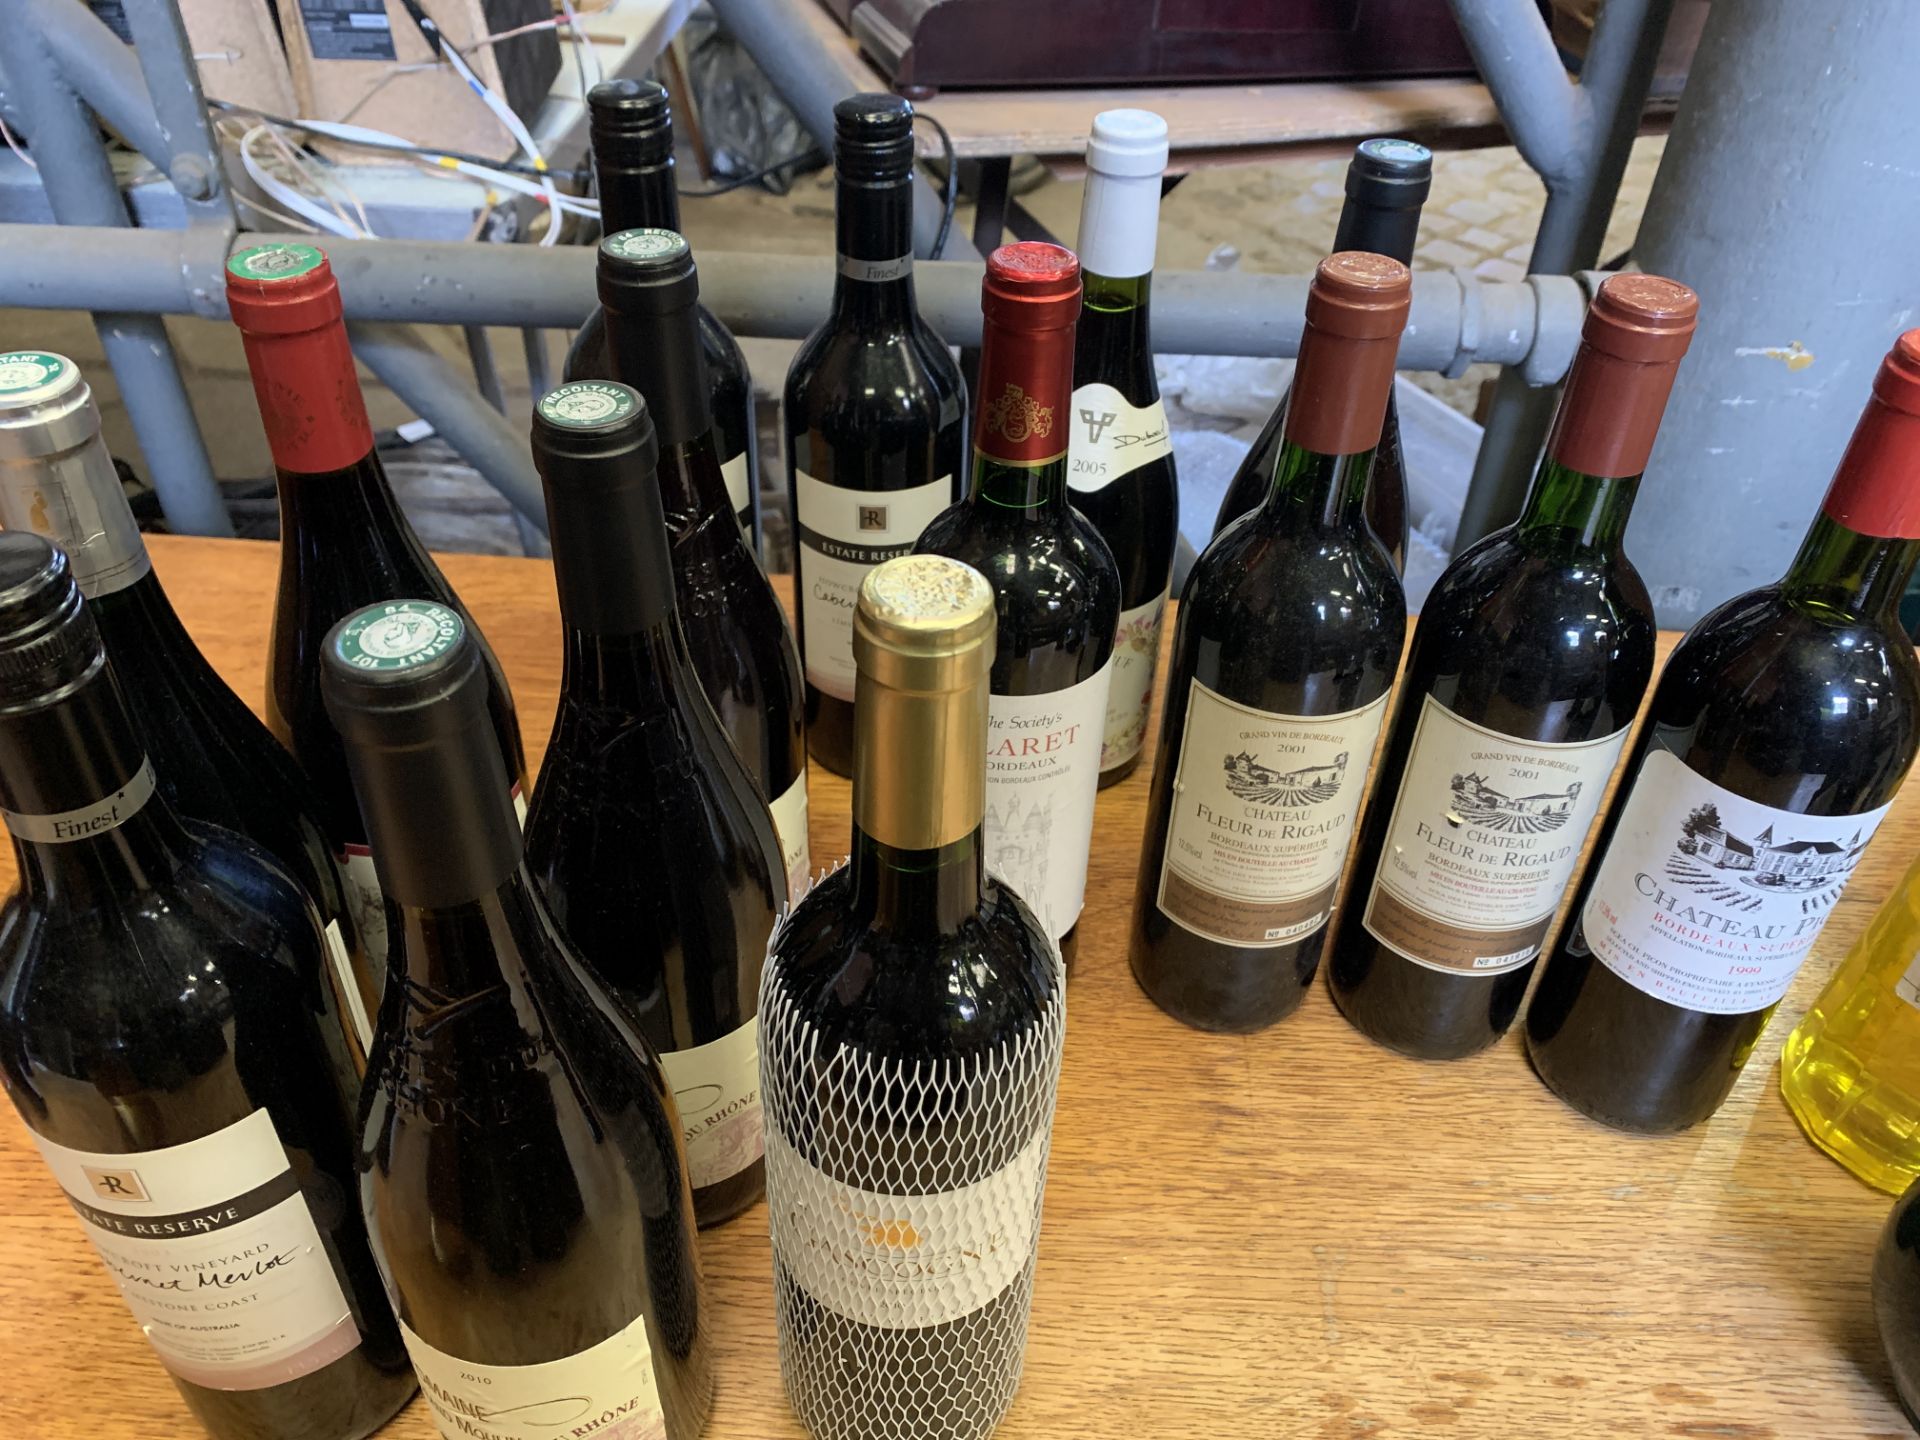 Fifteen bottles of various red wine